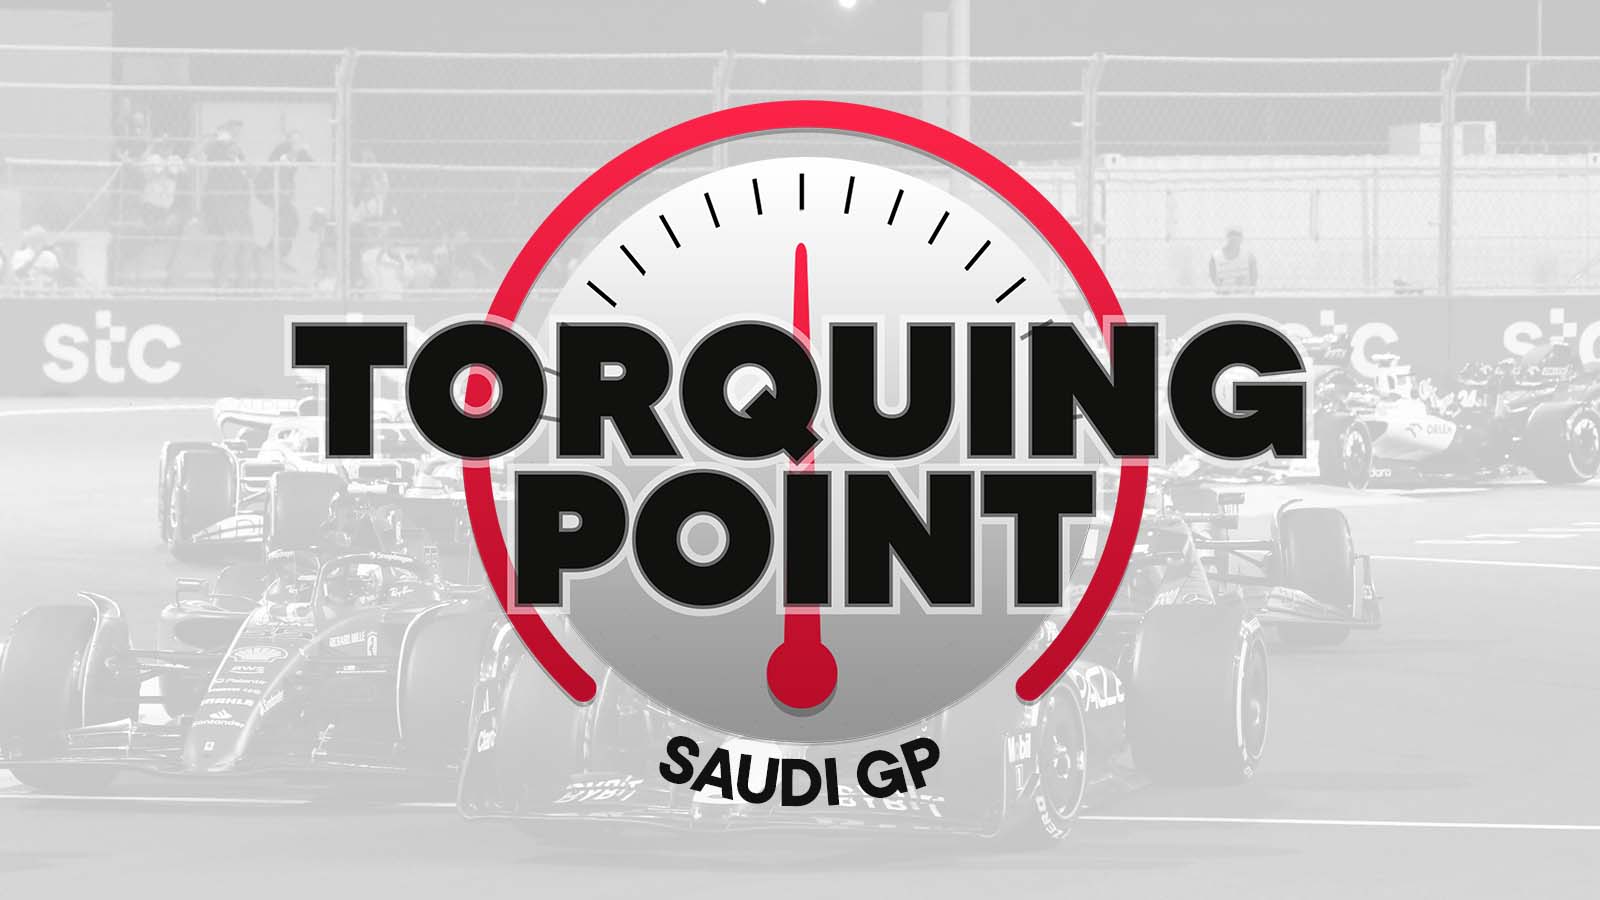 Torquing Point. Saudi Arabia March 2022.